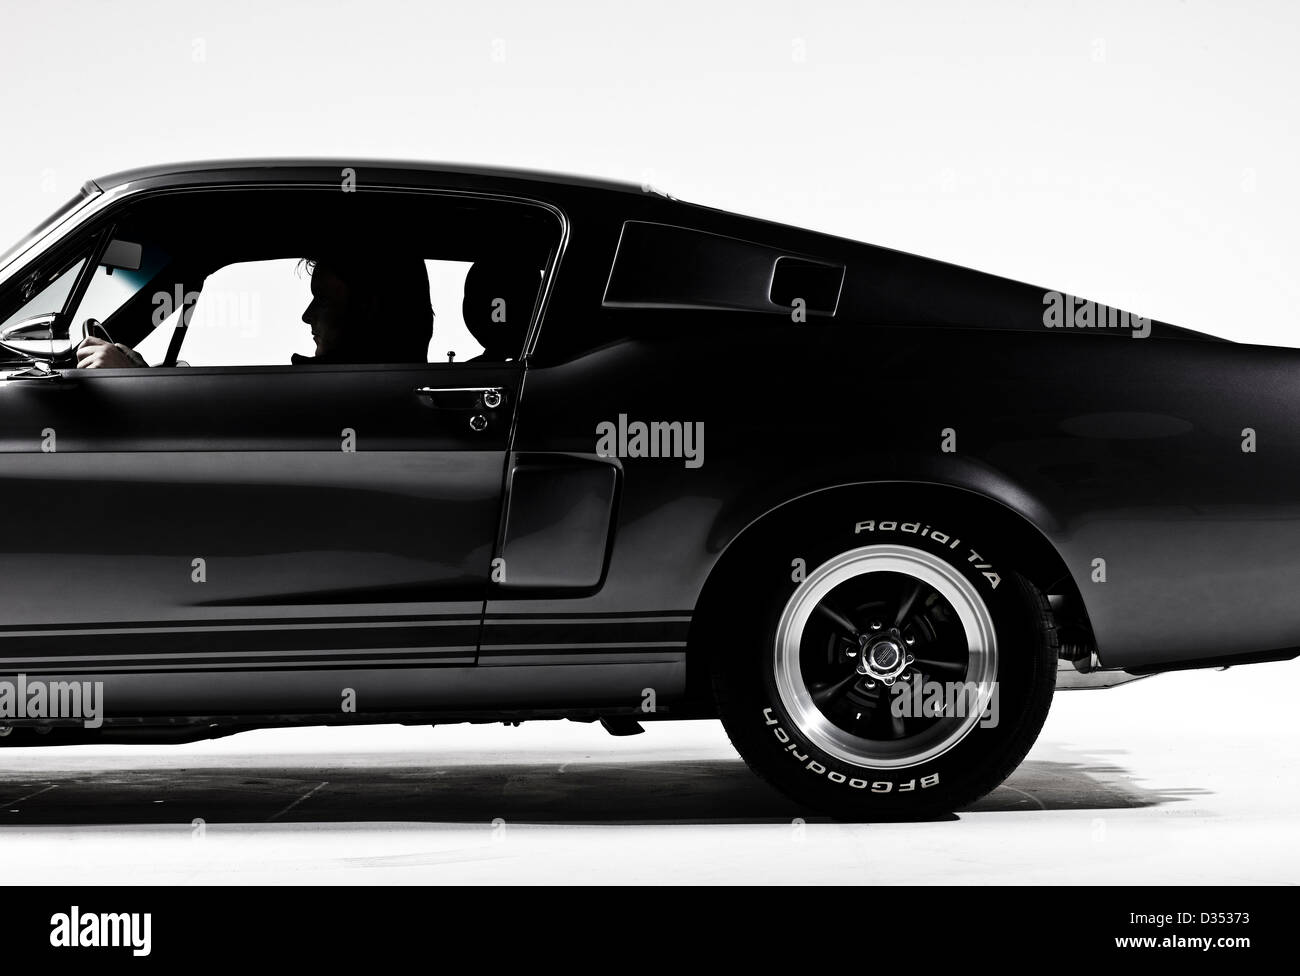 Gris oscuro Shelby Mustang GT 350 Coche deportivo de 2 puertas Foto de stock